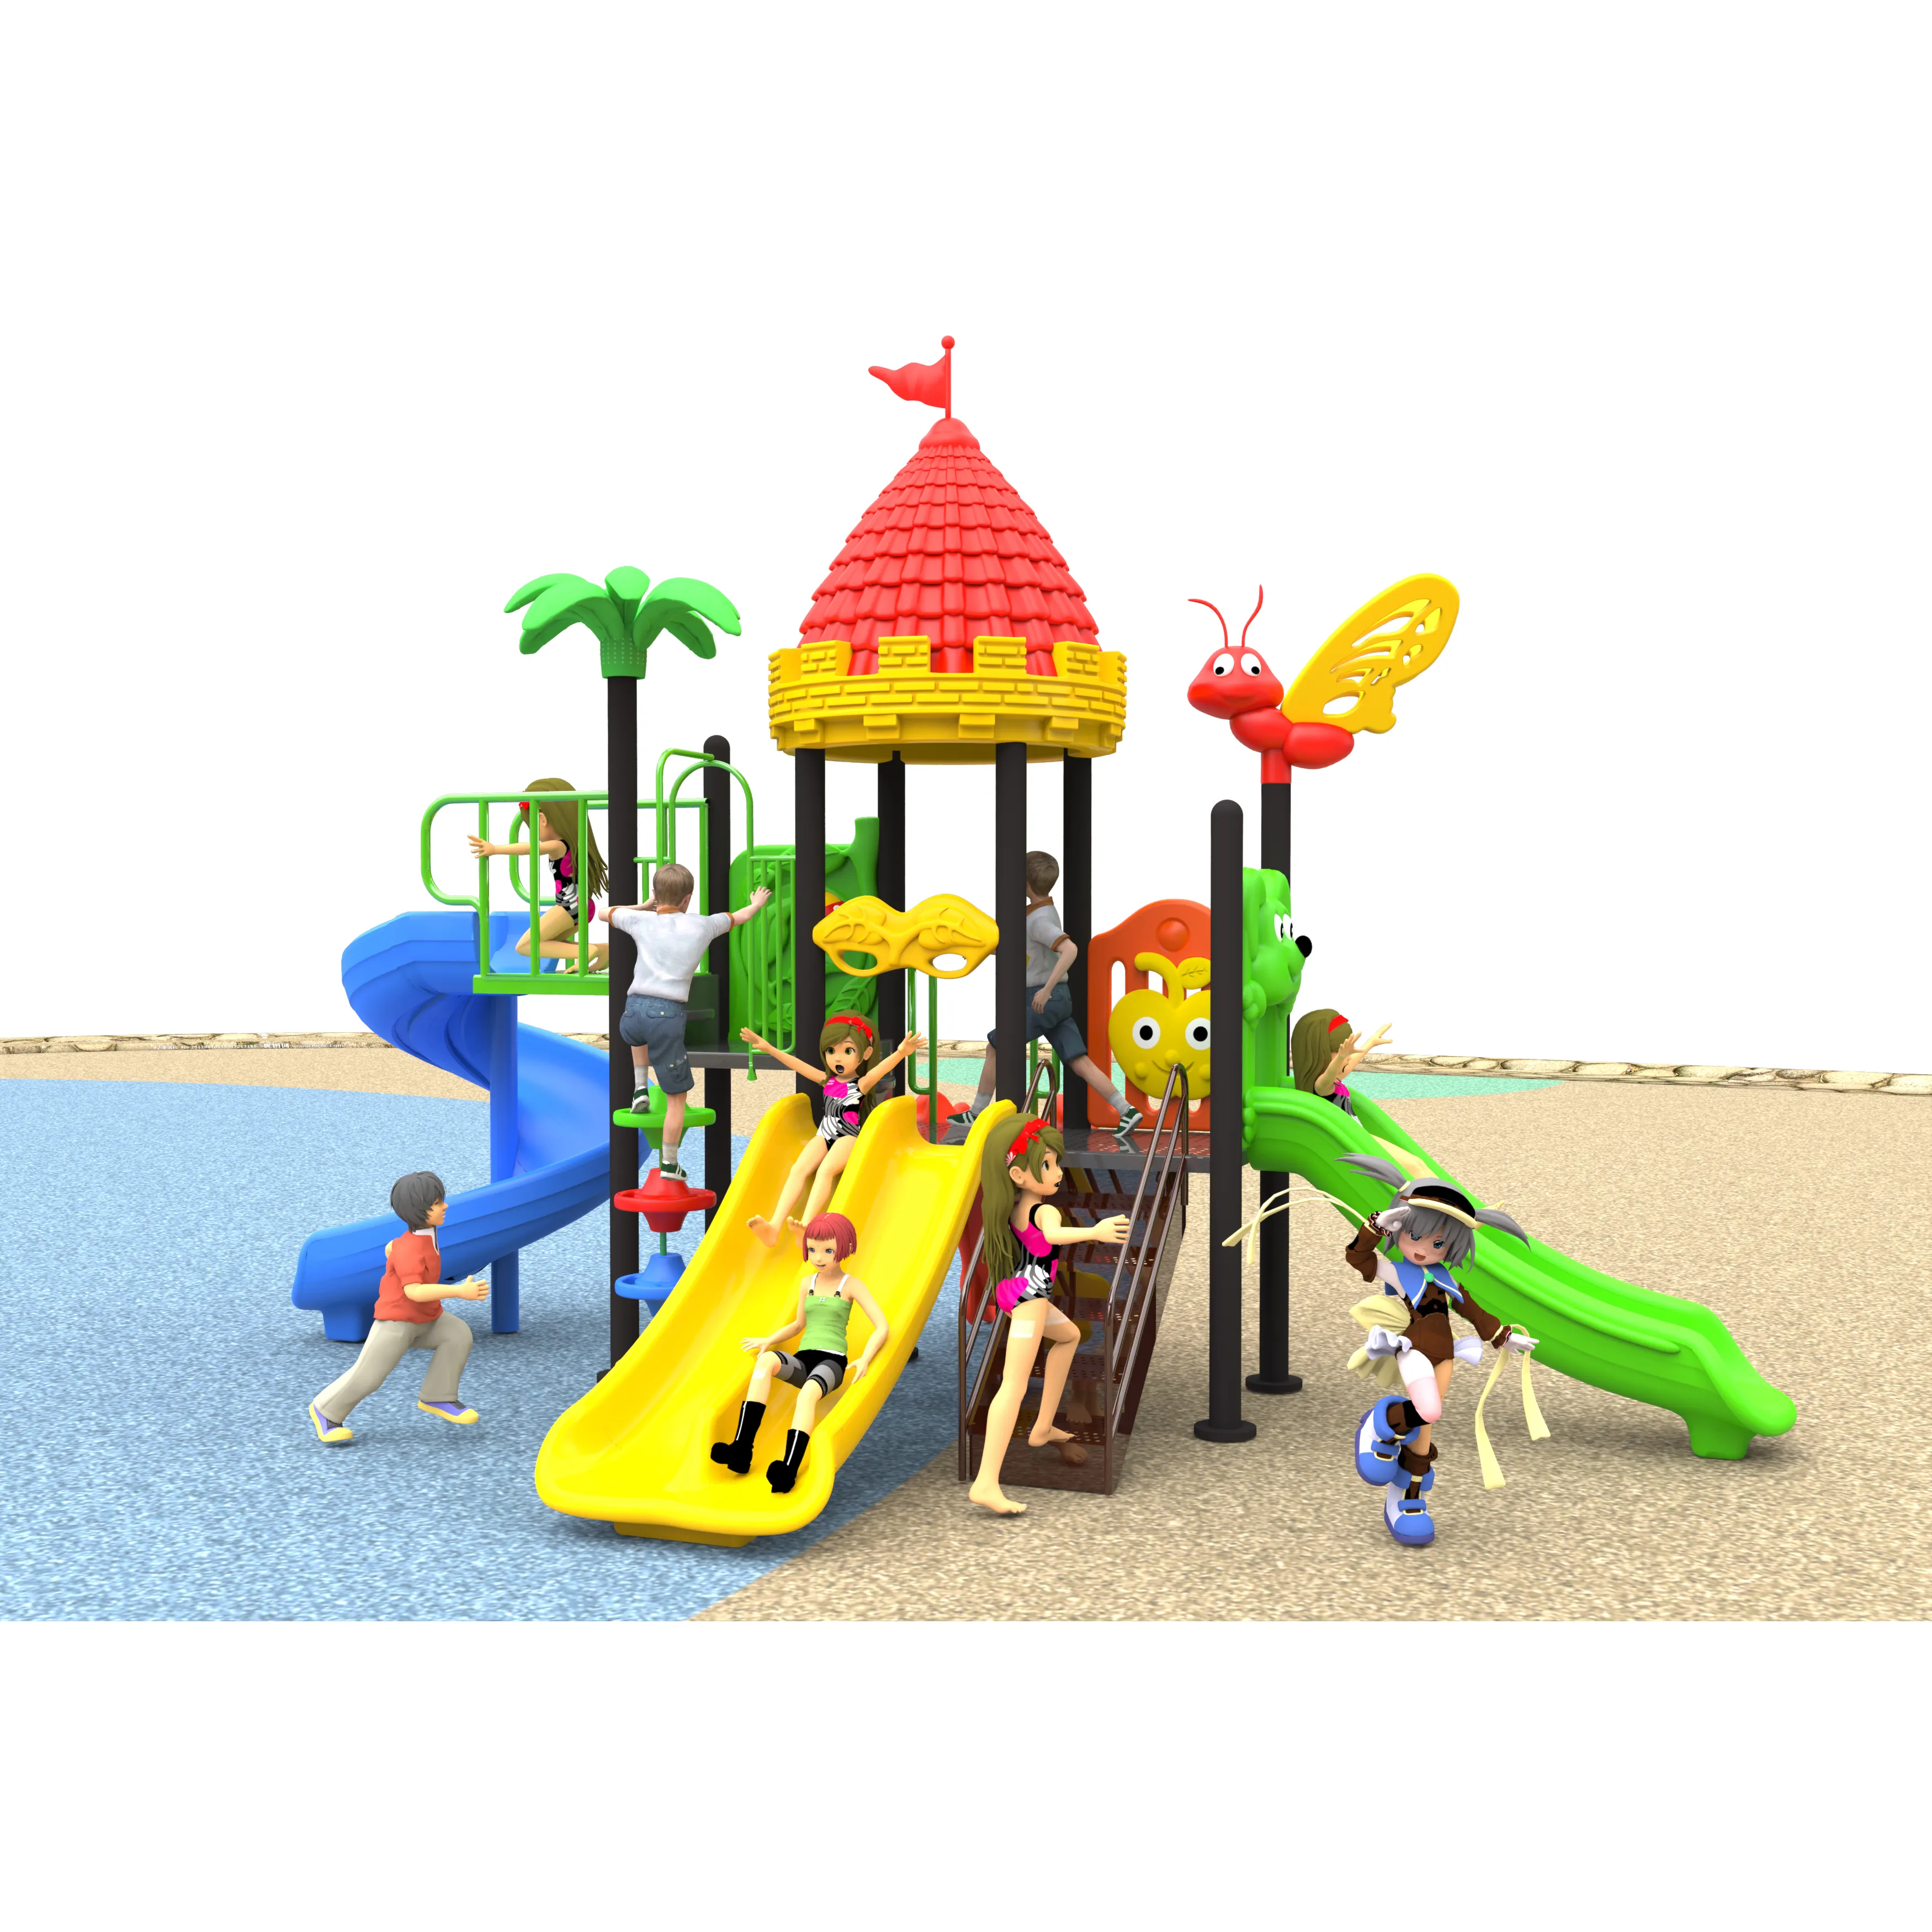 outdoor playground kids lovely plastic slide kindergarten outdoor playground equipment for children factory Outlet